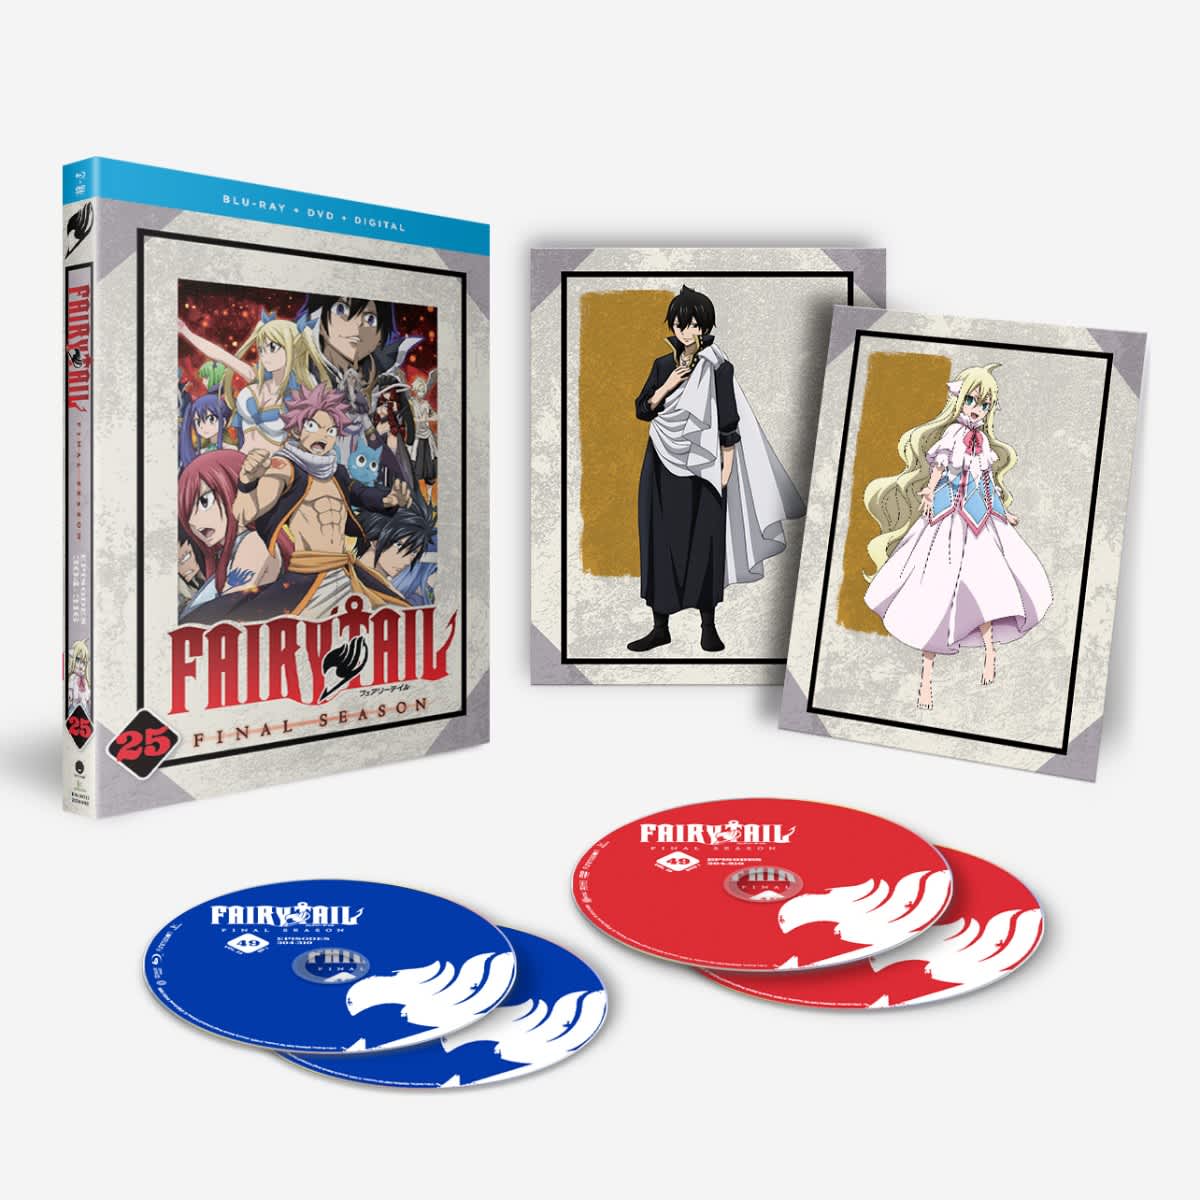 Shop Fairy Tail Final Season Part 25 Dvd Funimation